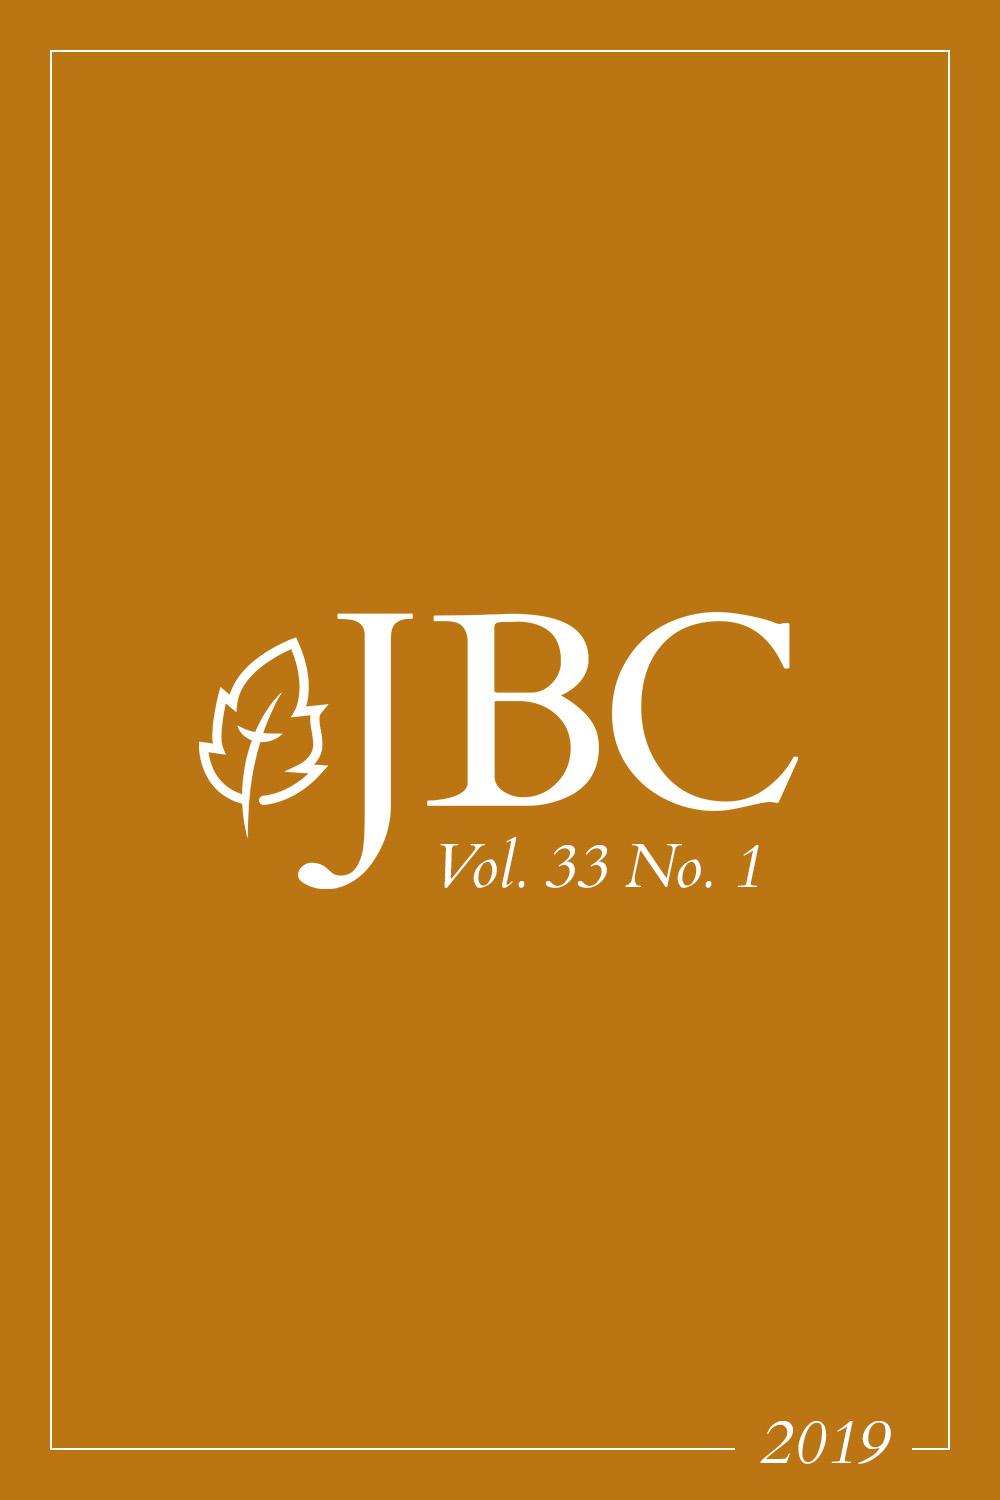 JBC Volume 33:1 (2019) PDF Featured Image